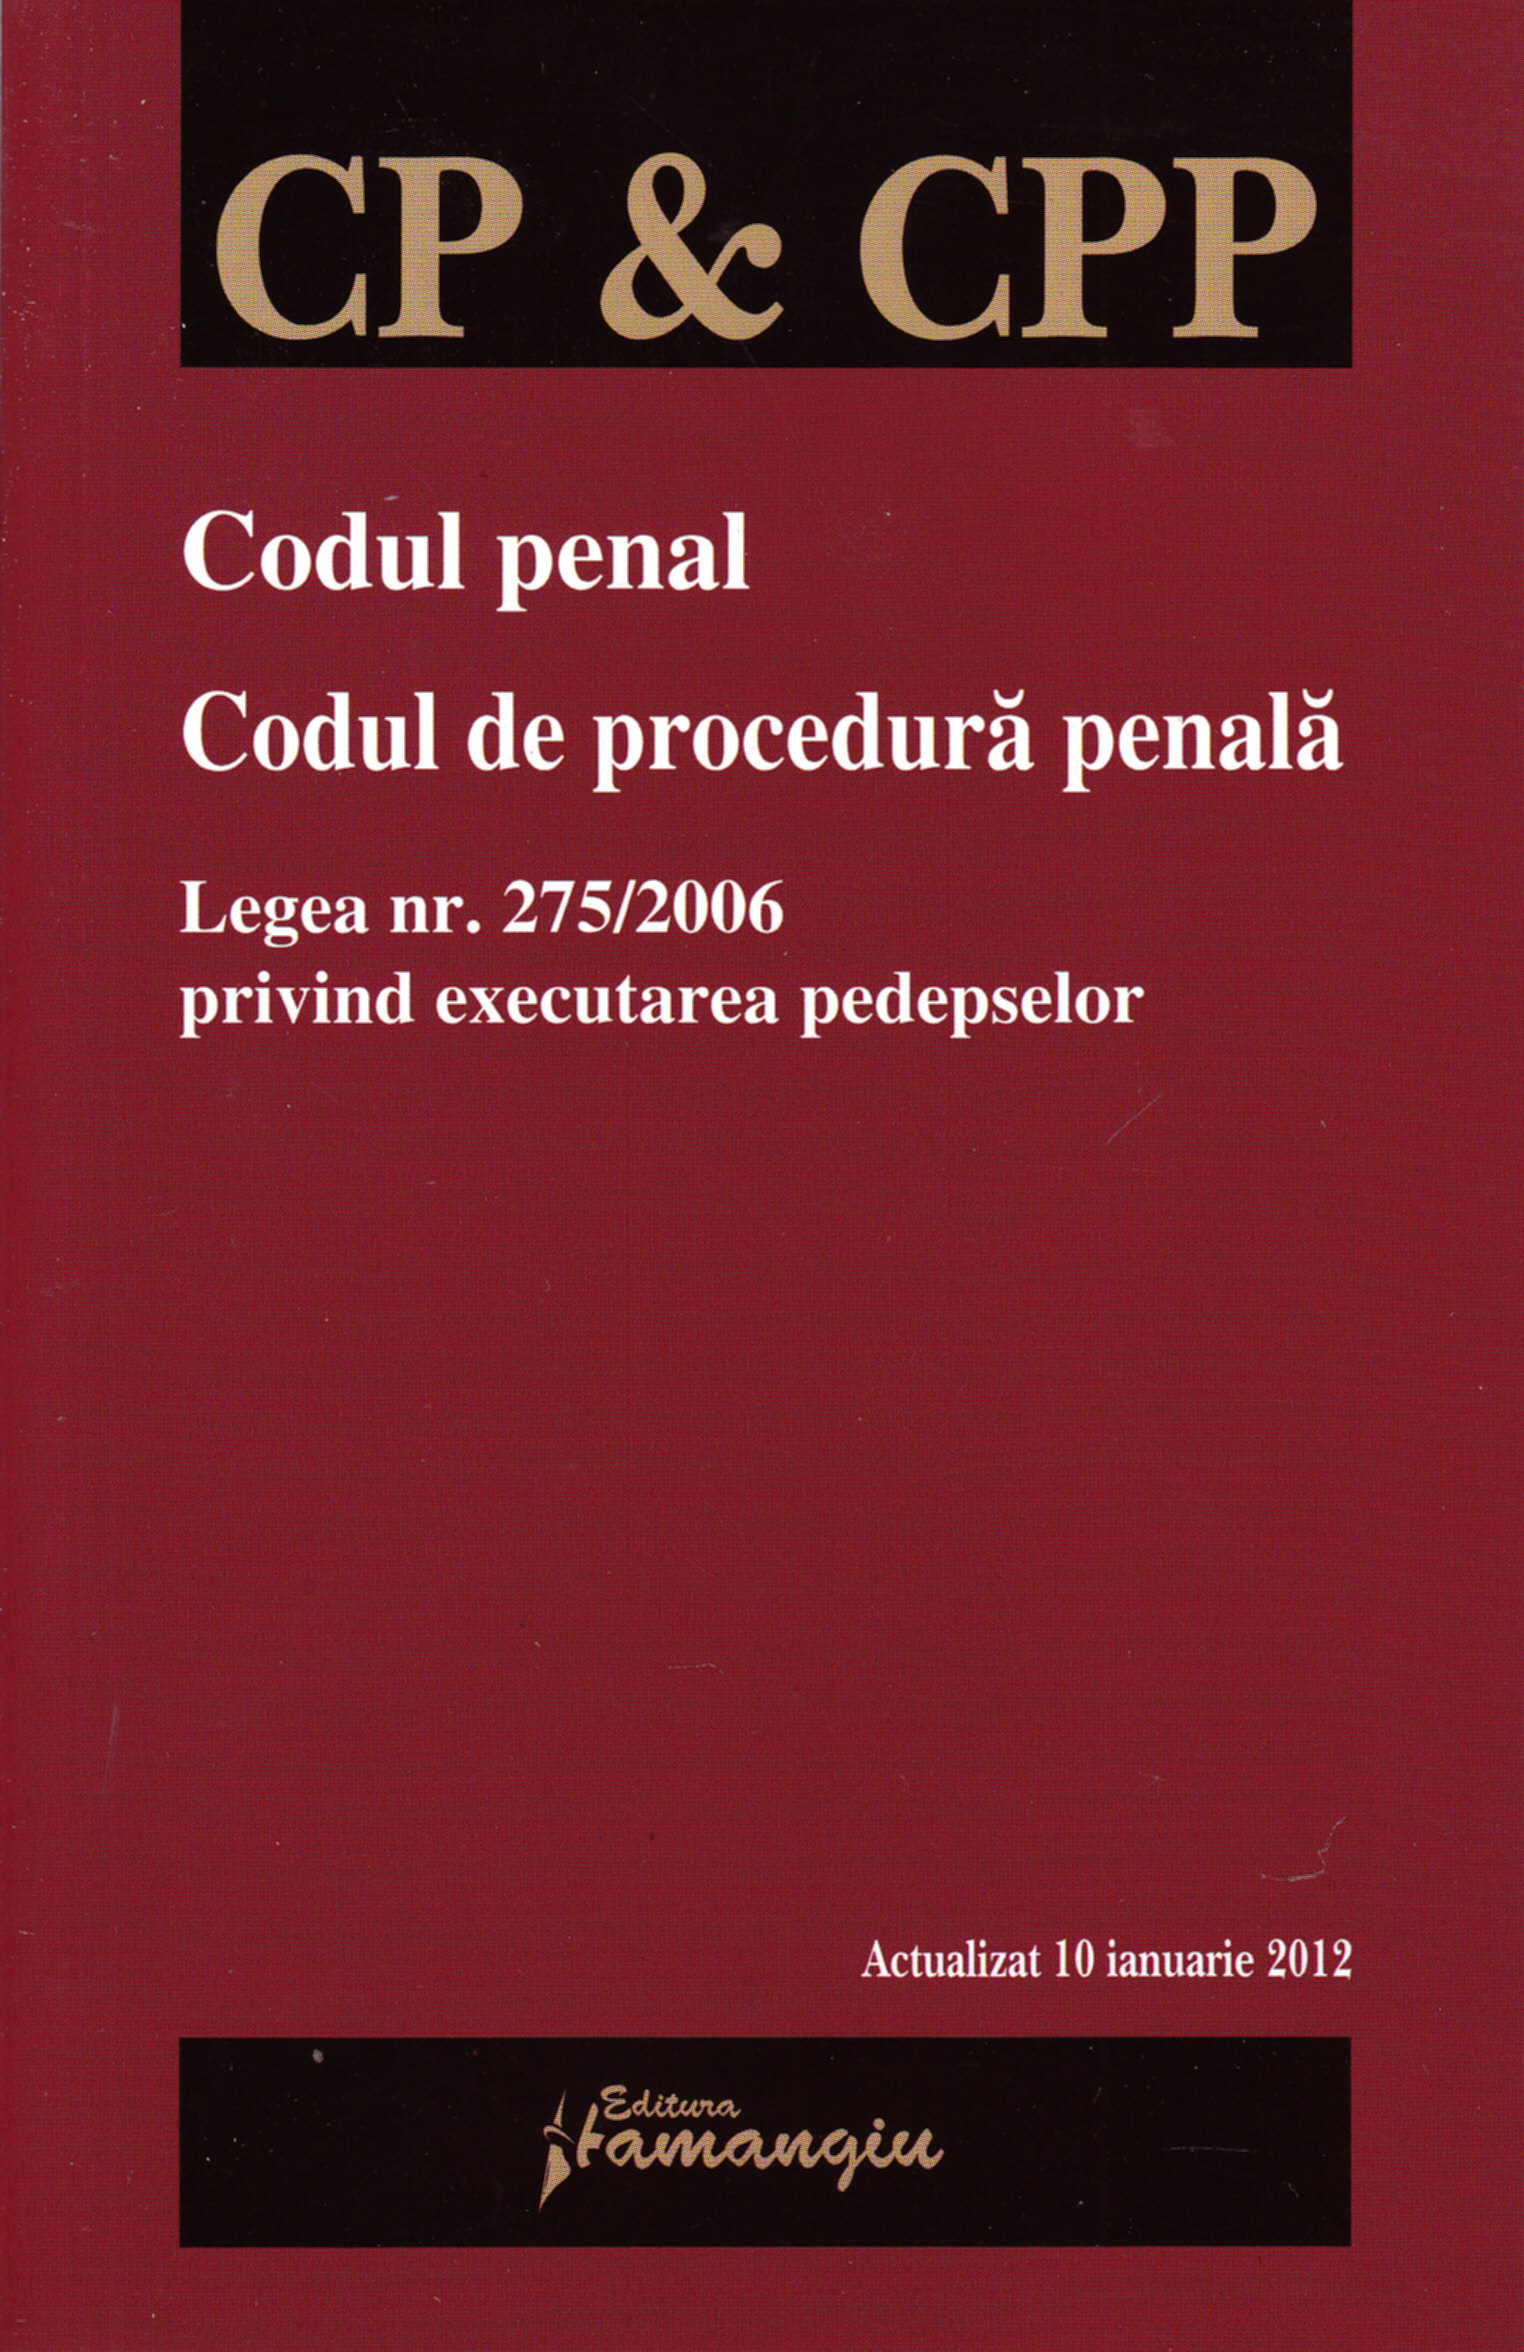 Codul penal. Codul de procedura penala act. 10 ianuarie 2012